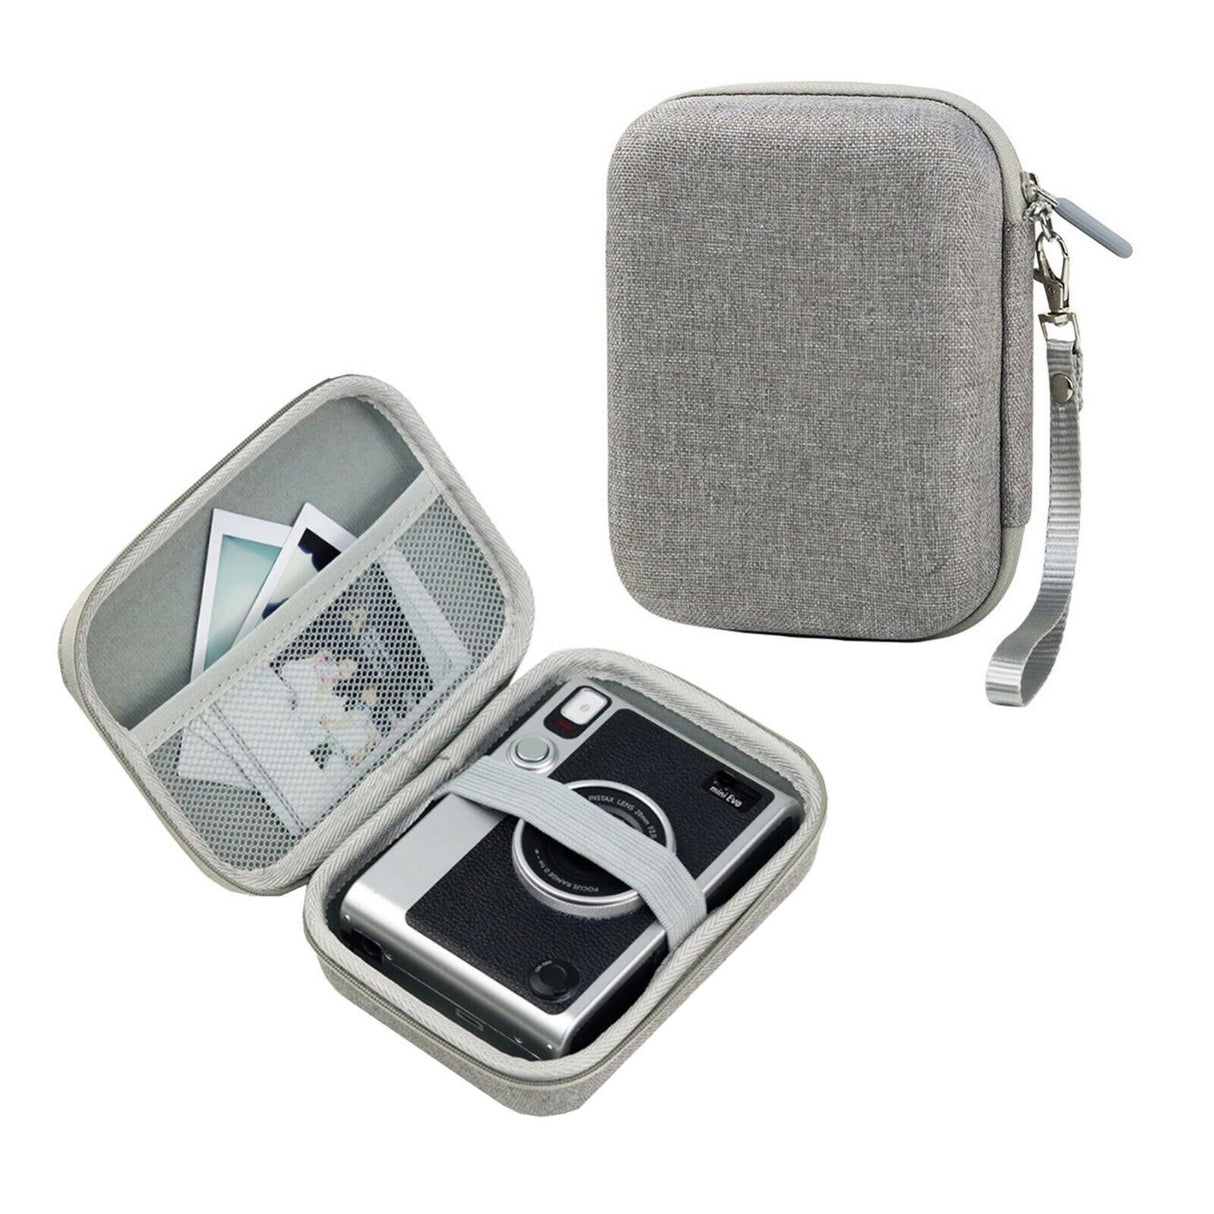 Zenko Instax Mini Evo Instant Camera Mini Link 2 Smartphone Printer Bag Accessories Protector Hard Case Lanyard